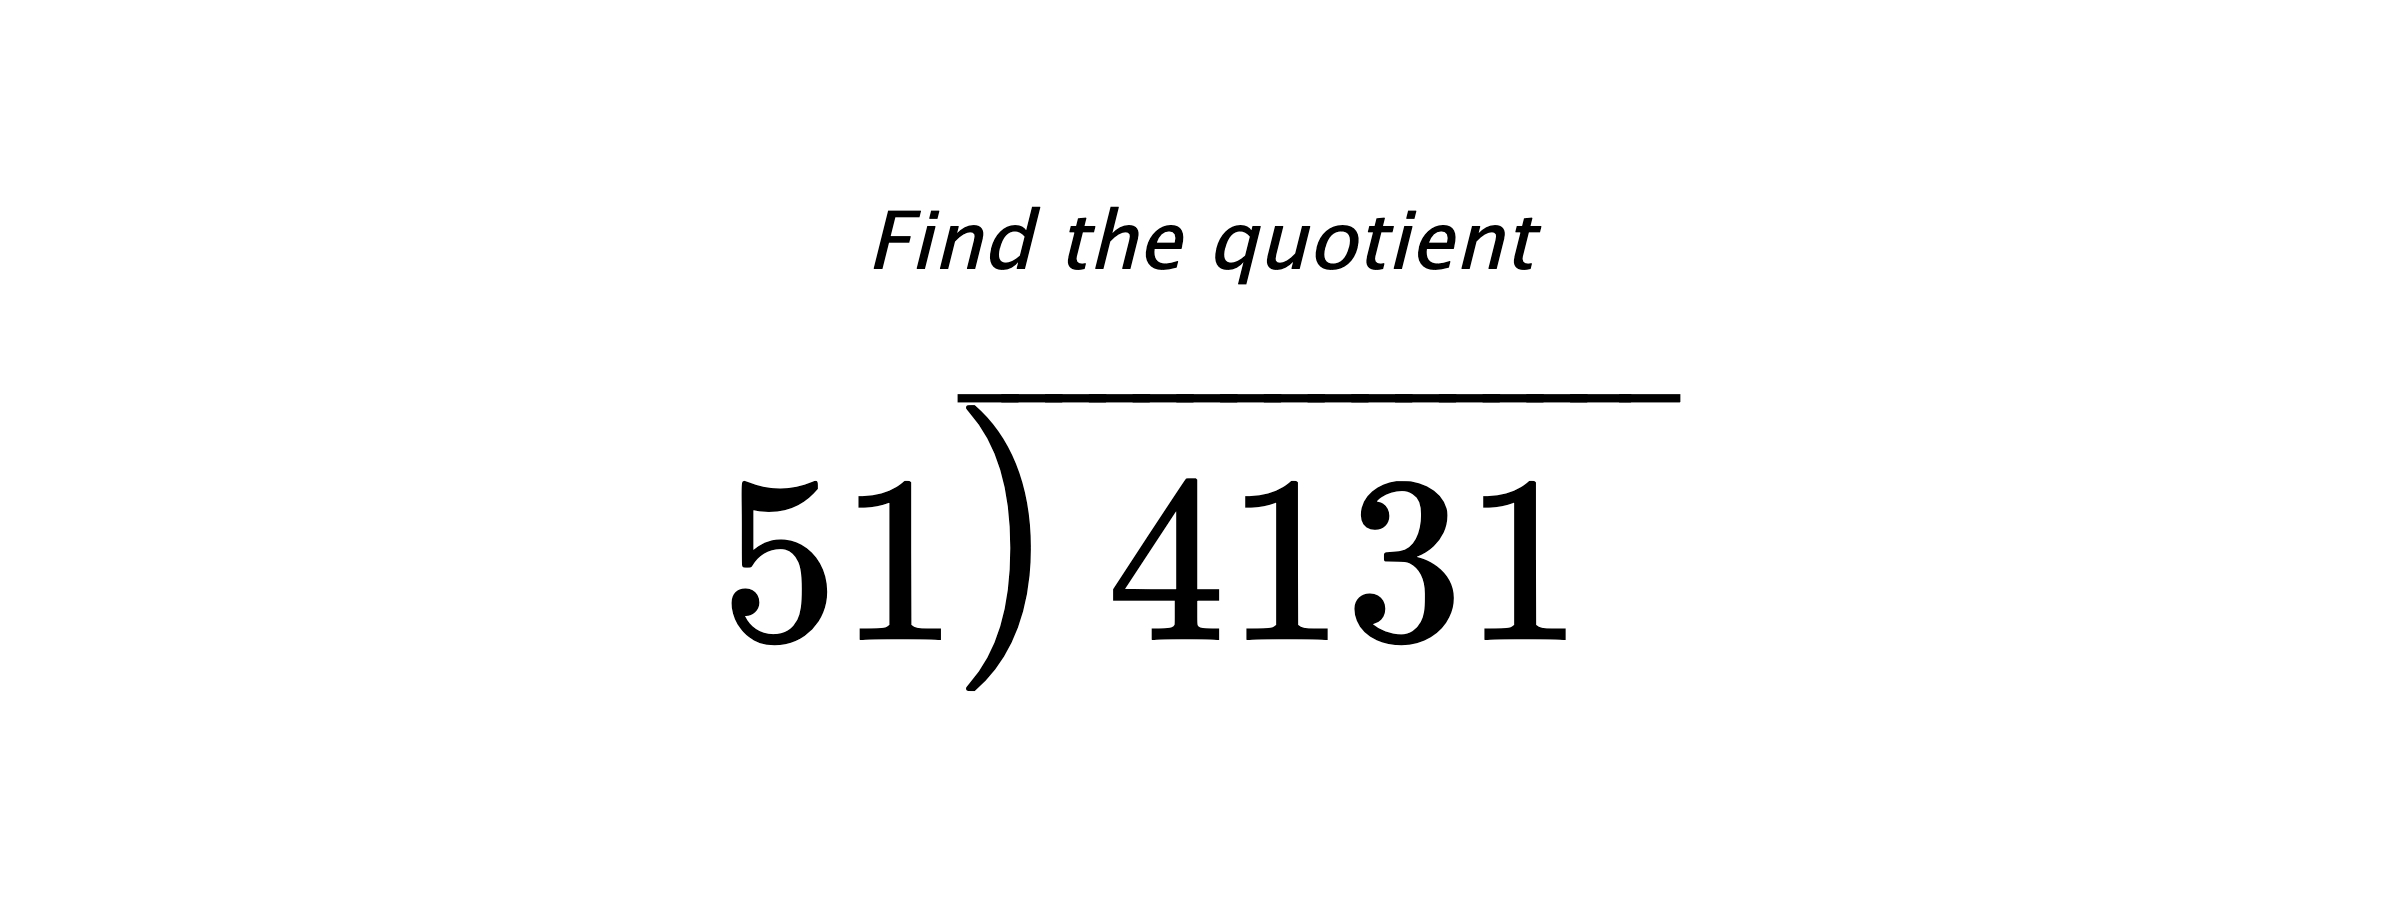 Find the quotient $ 51{\overline{\smash{\raise.3ex\hbox{$\big)$}}\,4131\phantom{)}}} $